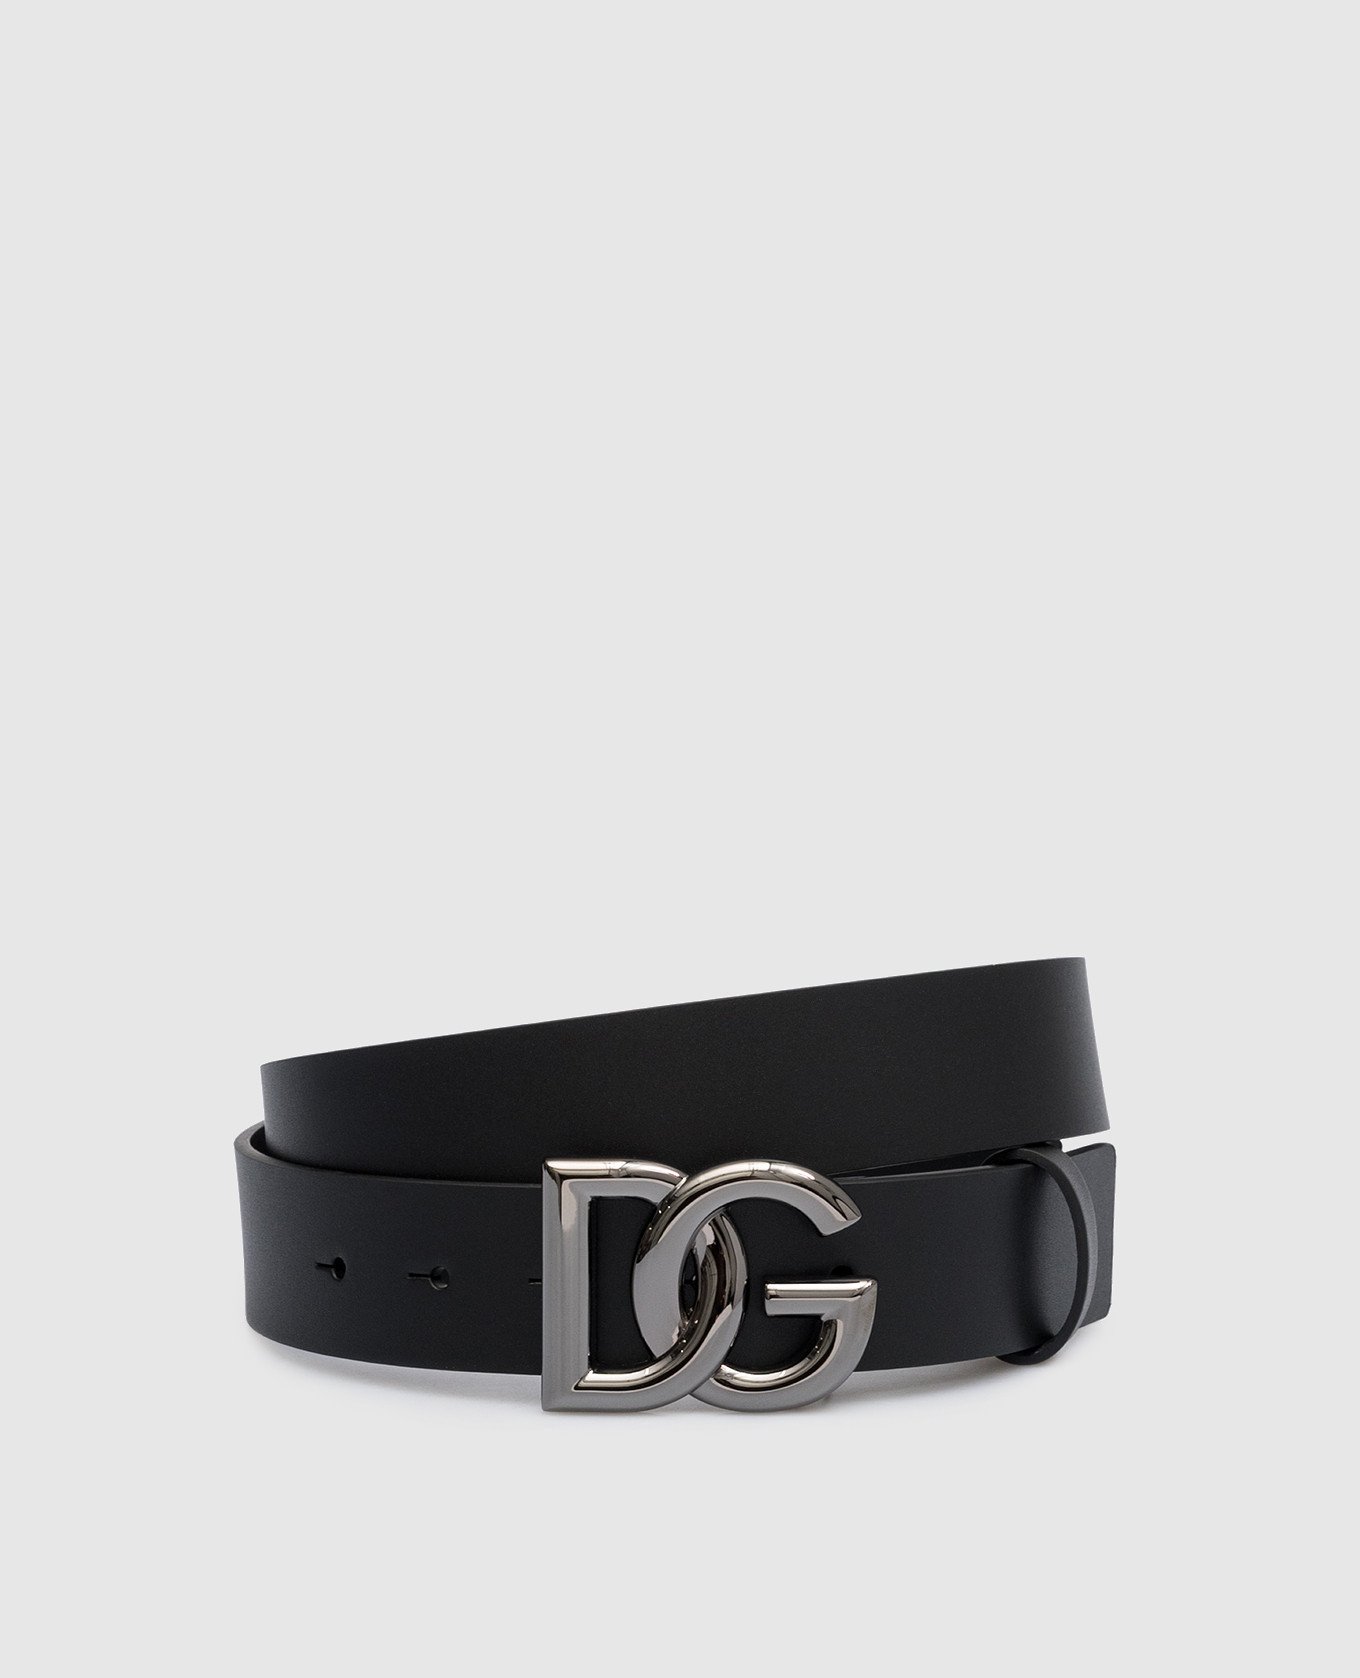 Black leather strap with metal DG logo